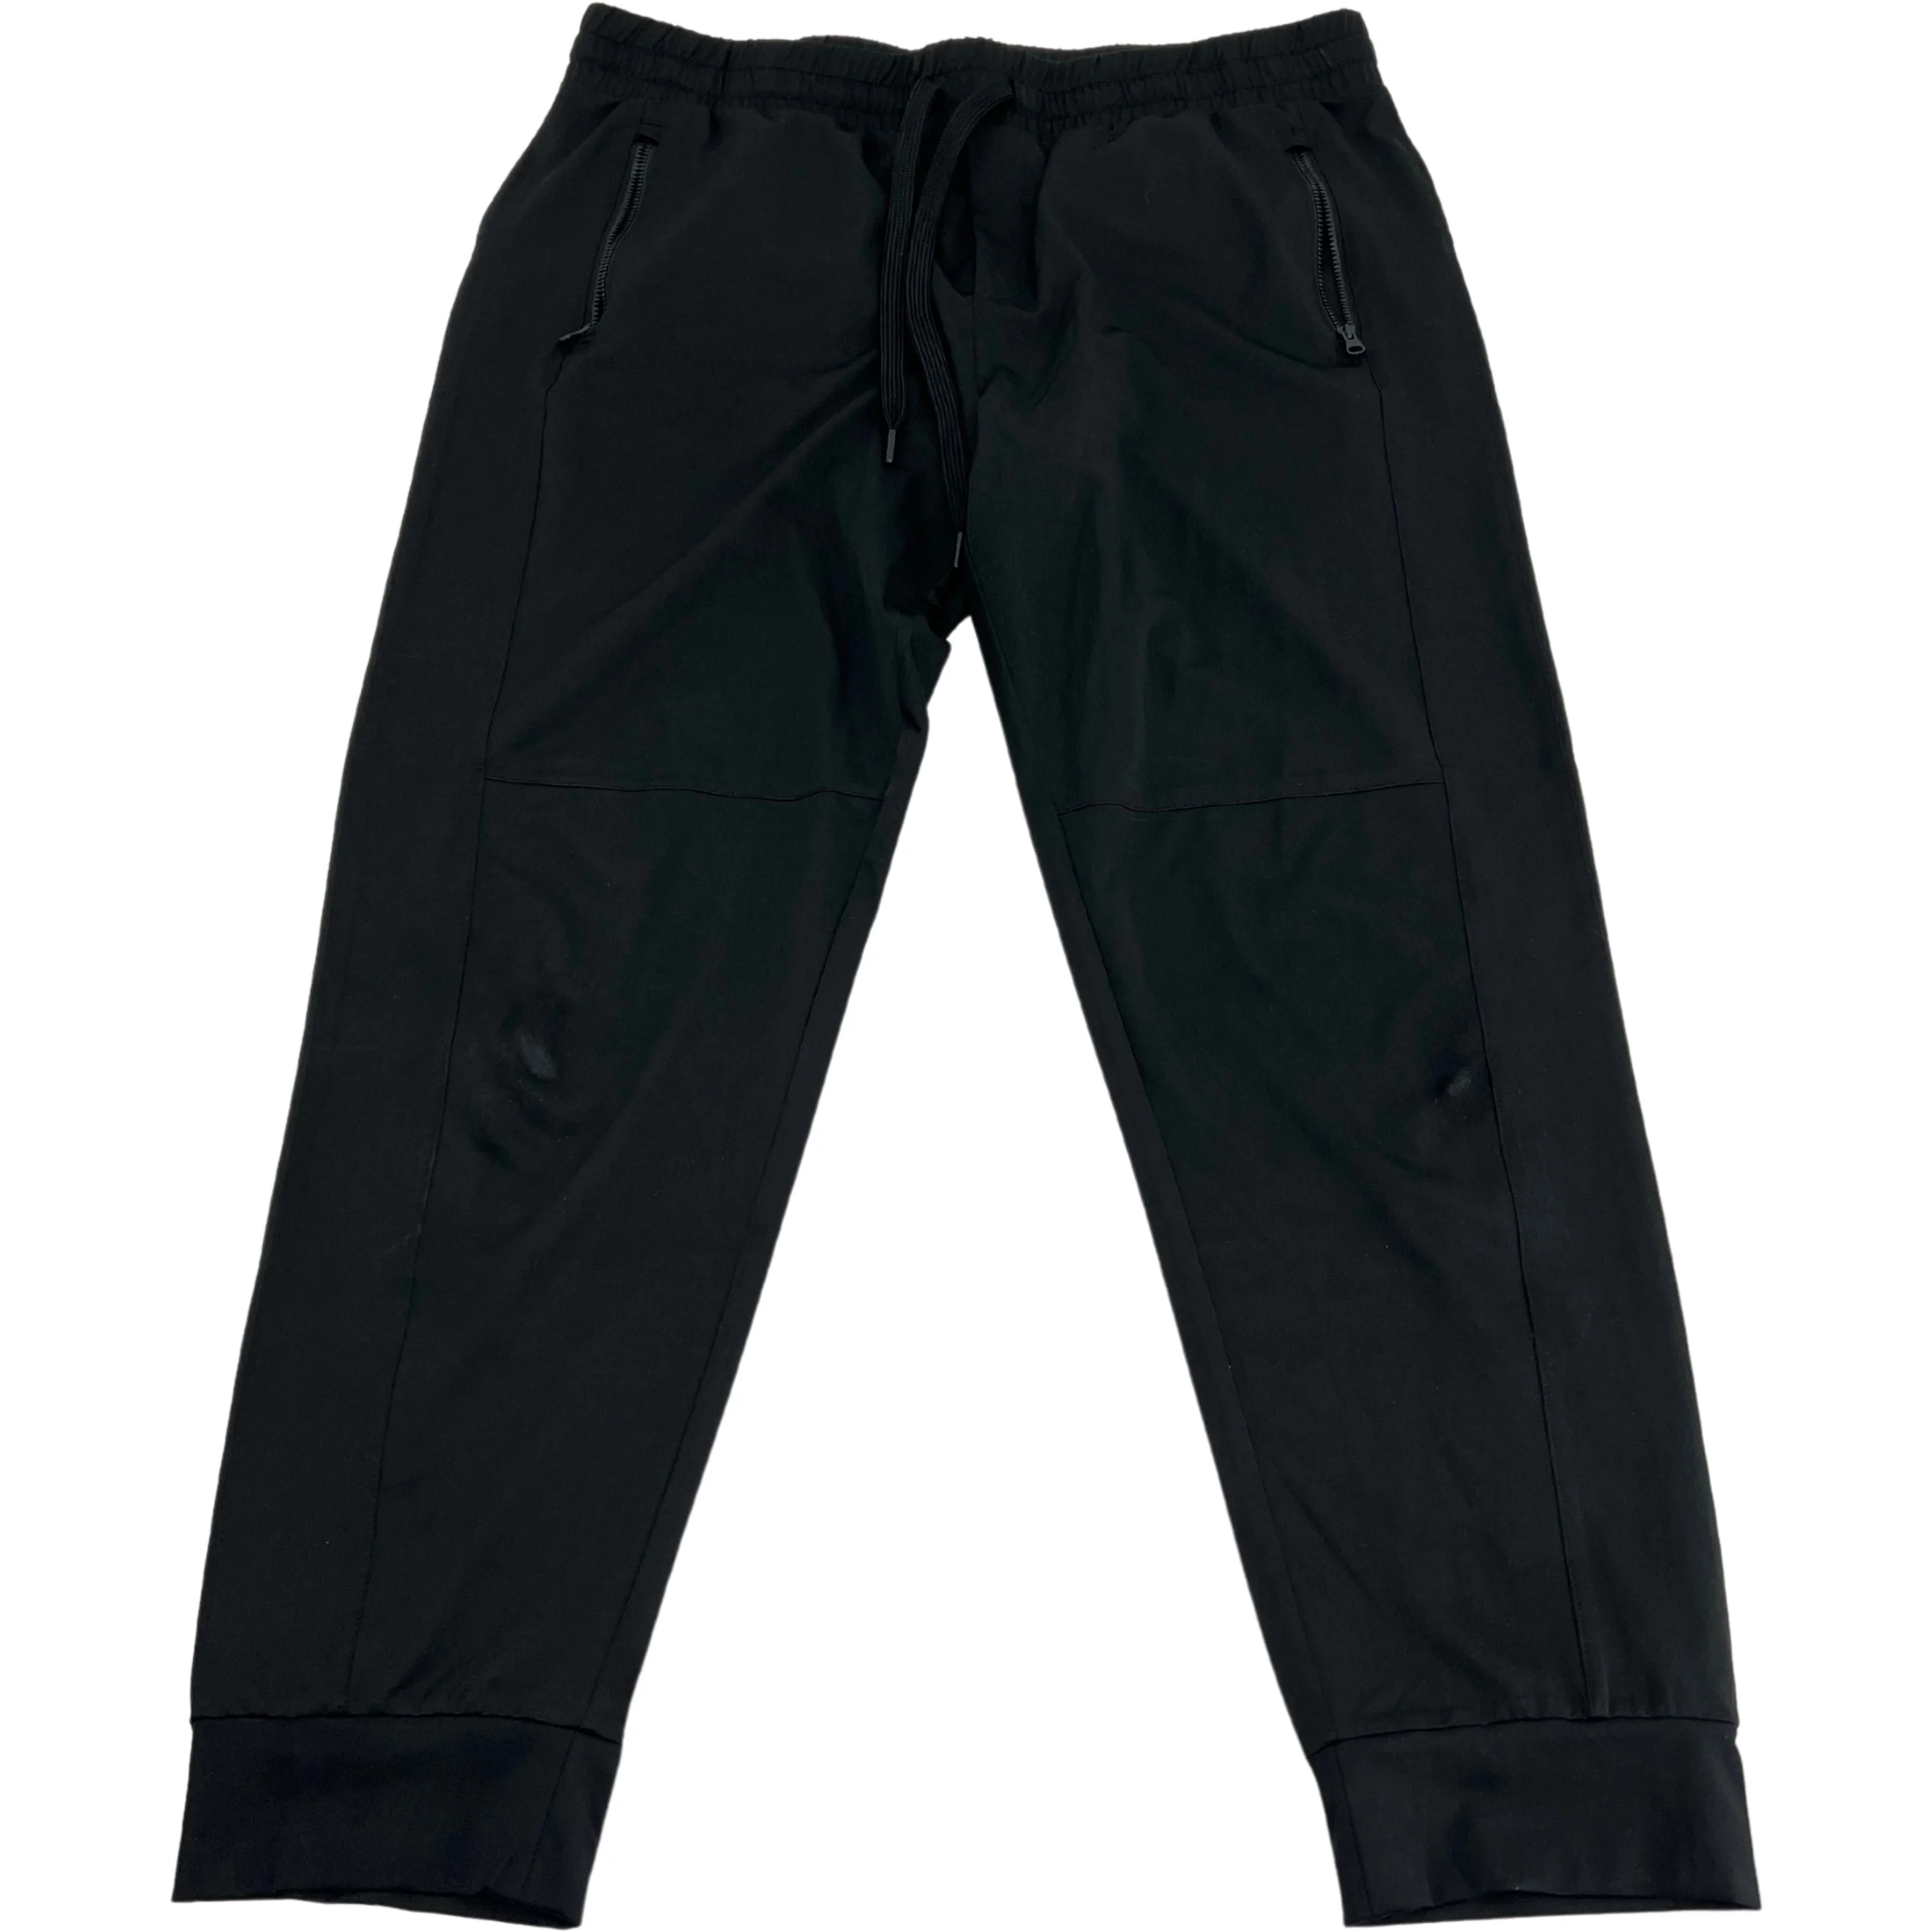 JWZUY Women's Elastic High Waist Sweatpants Workout Pocket Jogger Pants  without Pocket Solid Classic Fit Athletic Pants Black XXL